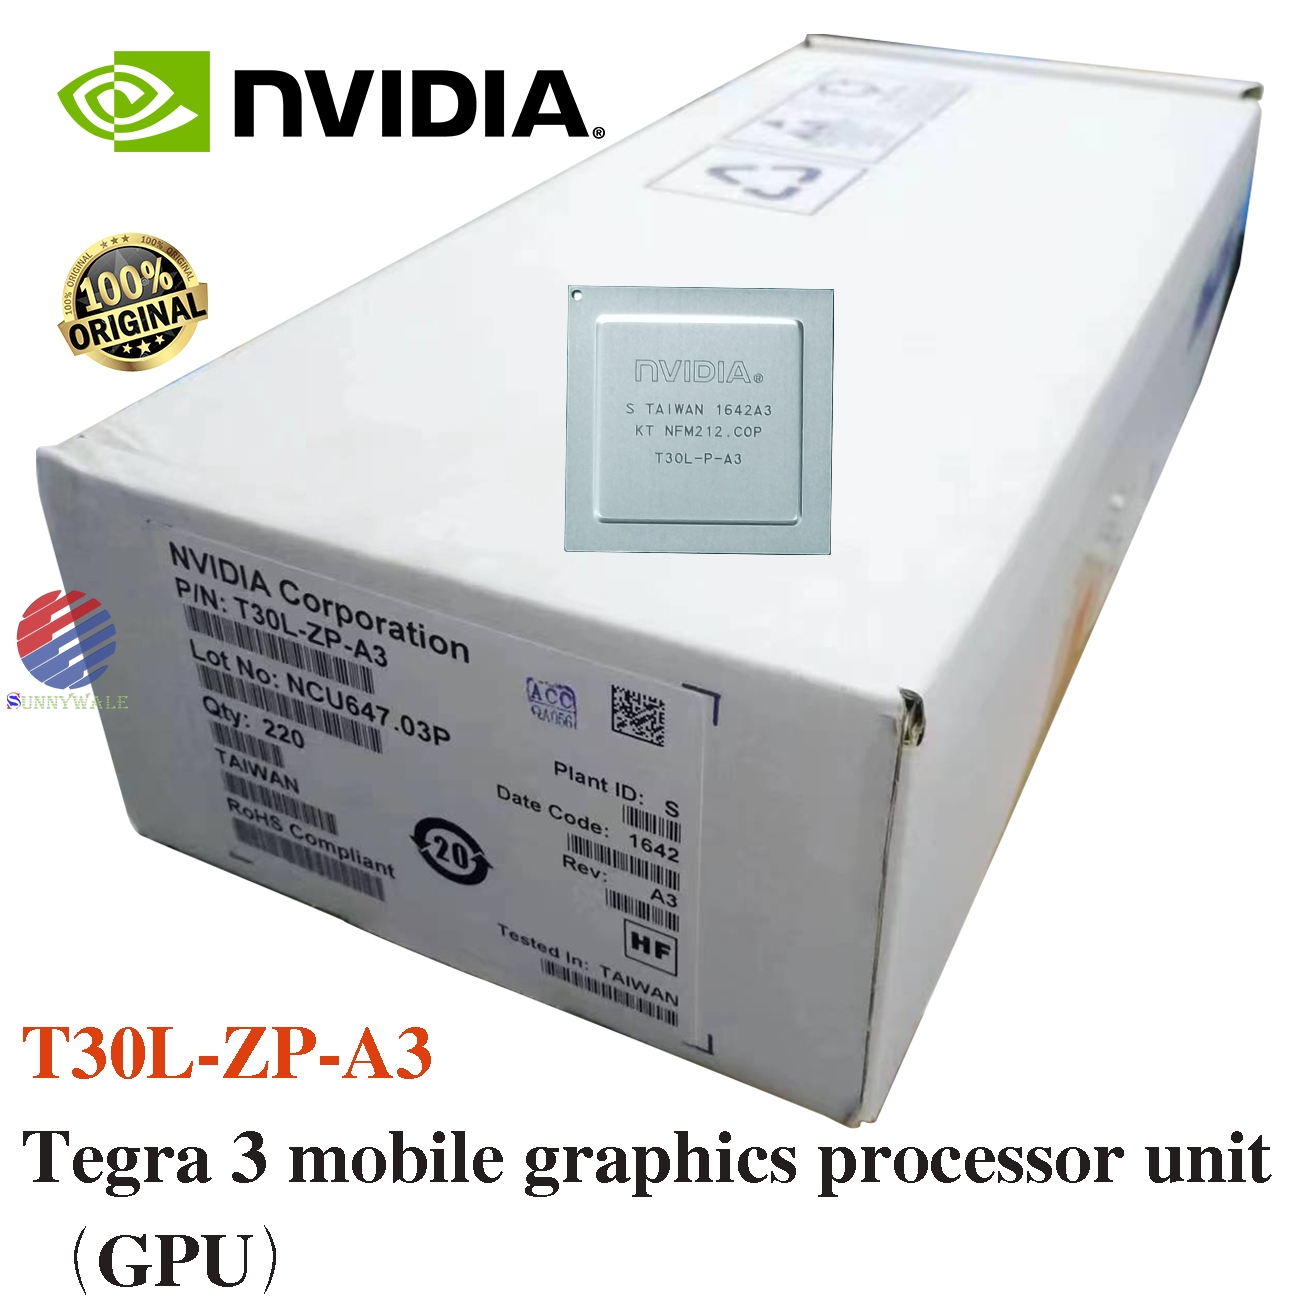 T30L-ZP-A3, T30L-P-A3, NVIDIA, Tegra 3, mobile platform GPU, laptop graphics chip, GPU based on Kal-El